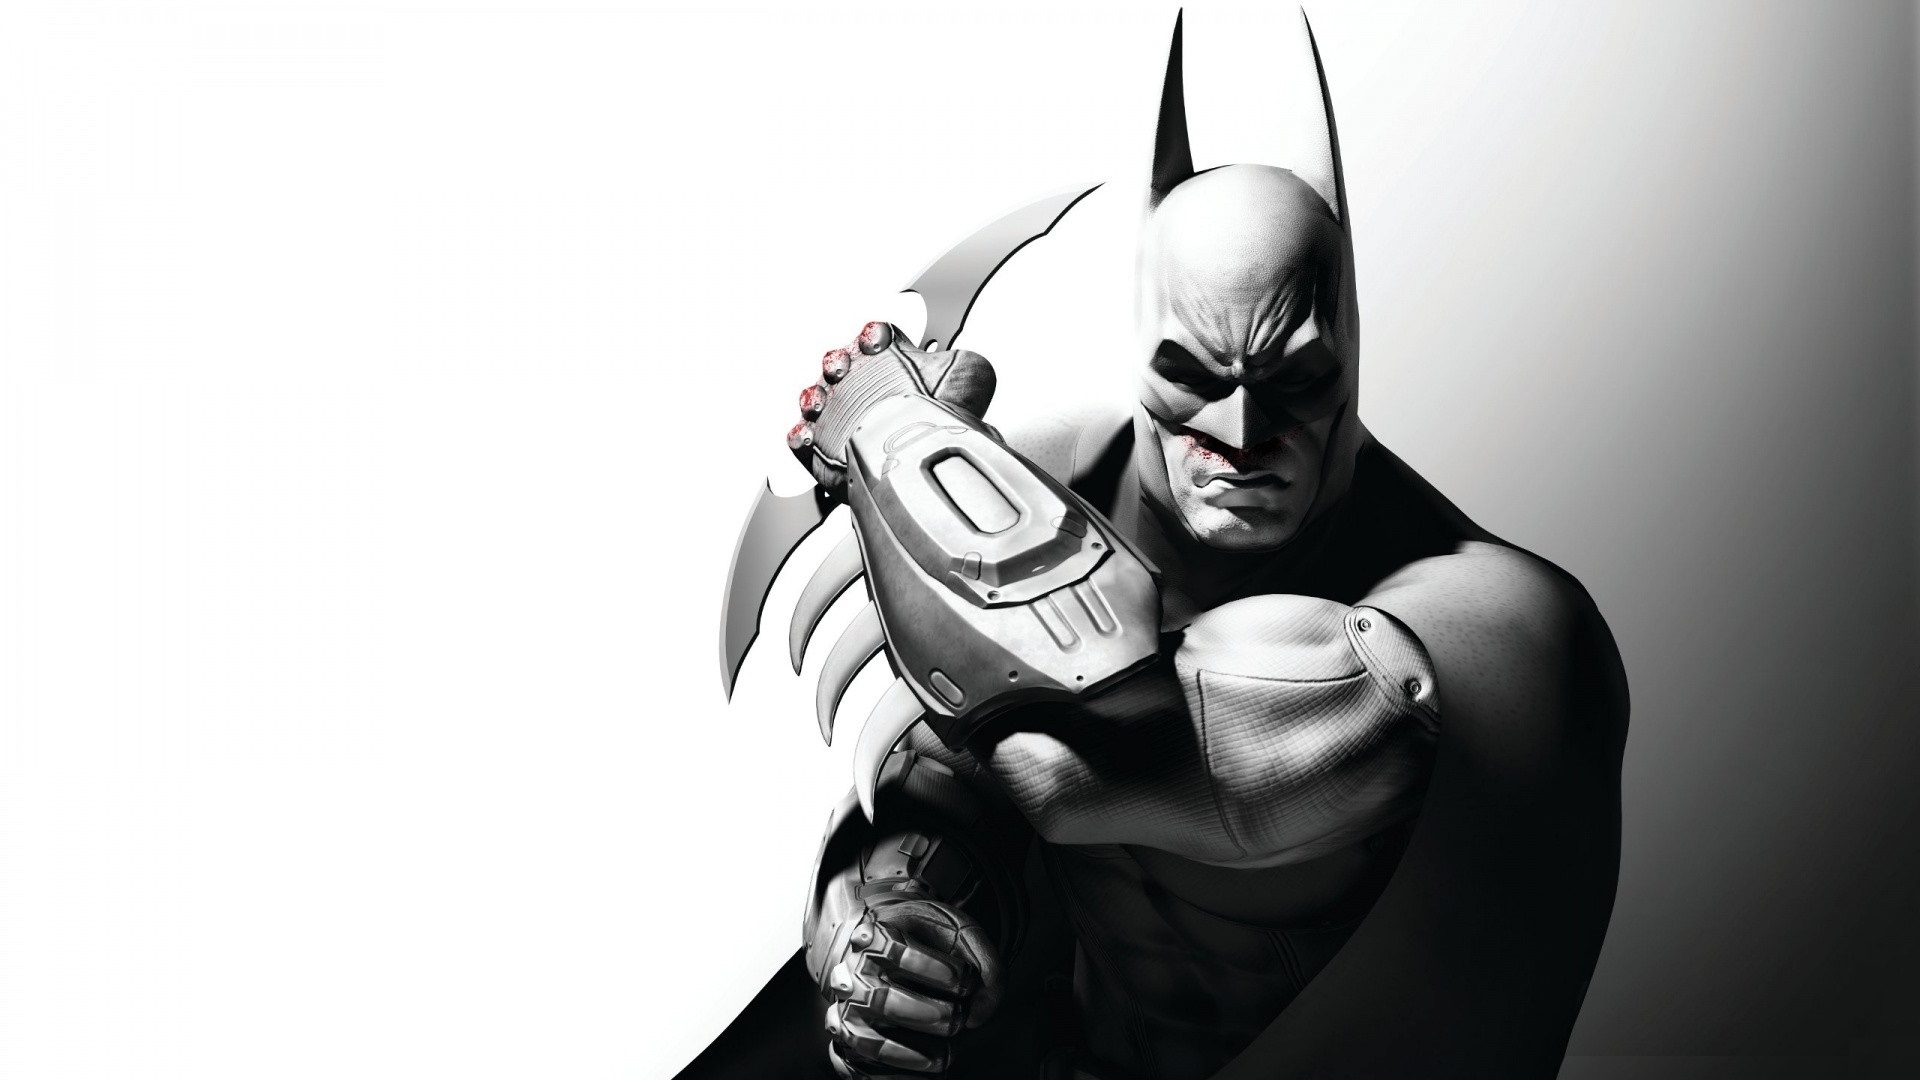 Batman For Tablet Wallpapers